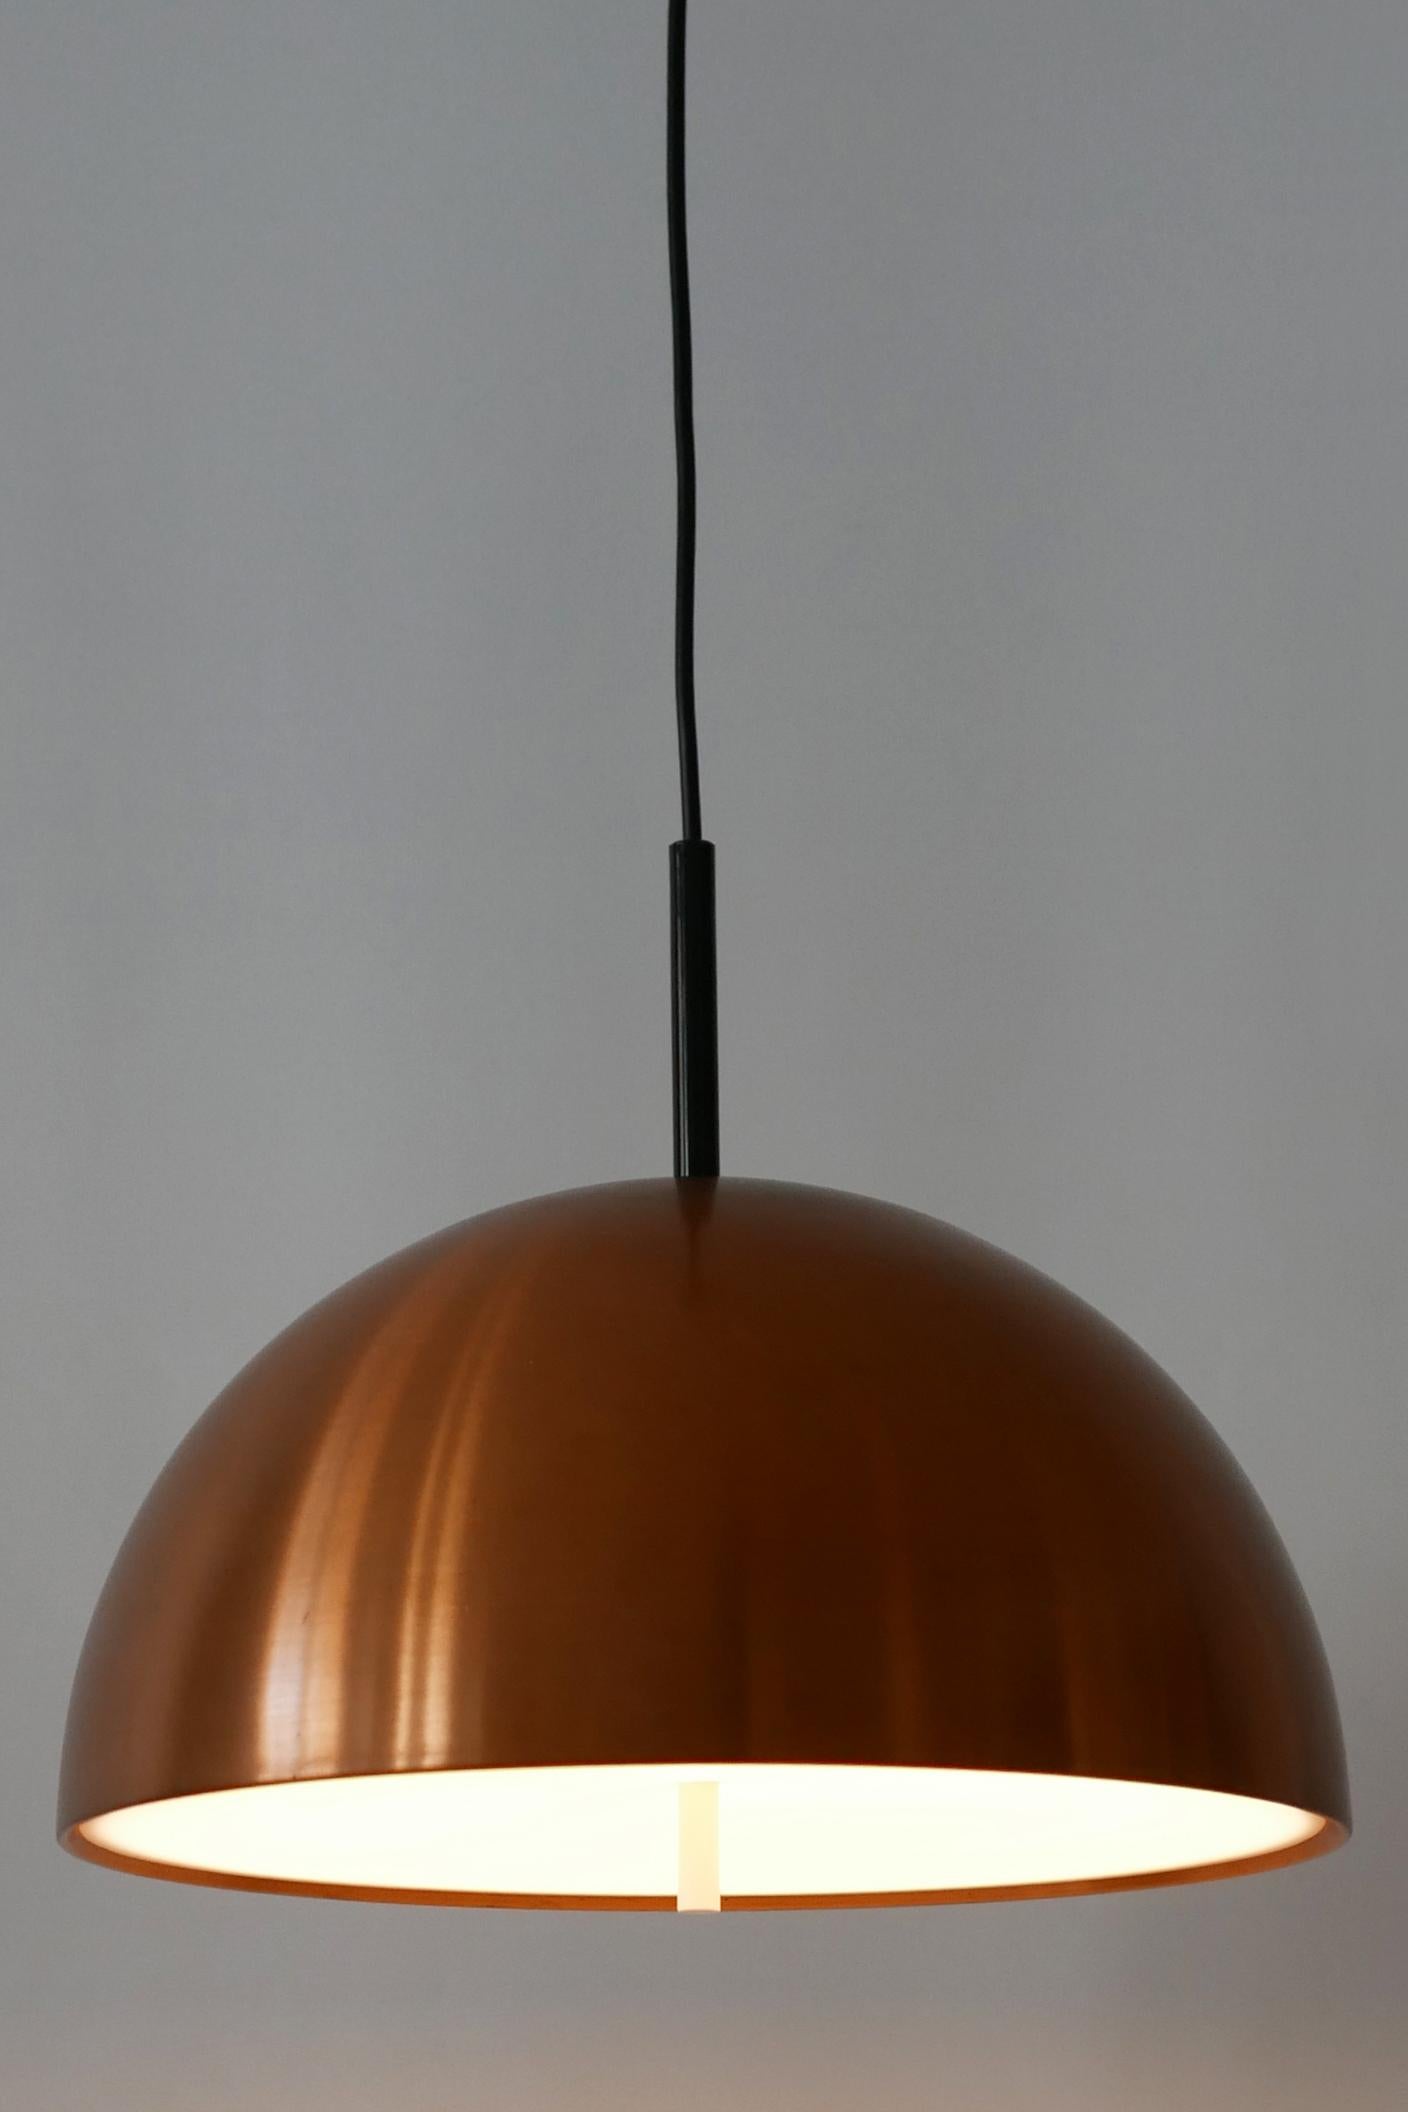 Elegant Mid-Century Modern Copper Pendant Lamp by Staff & Schwarz 1960s, Germany For Sale 9